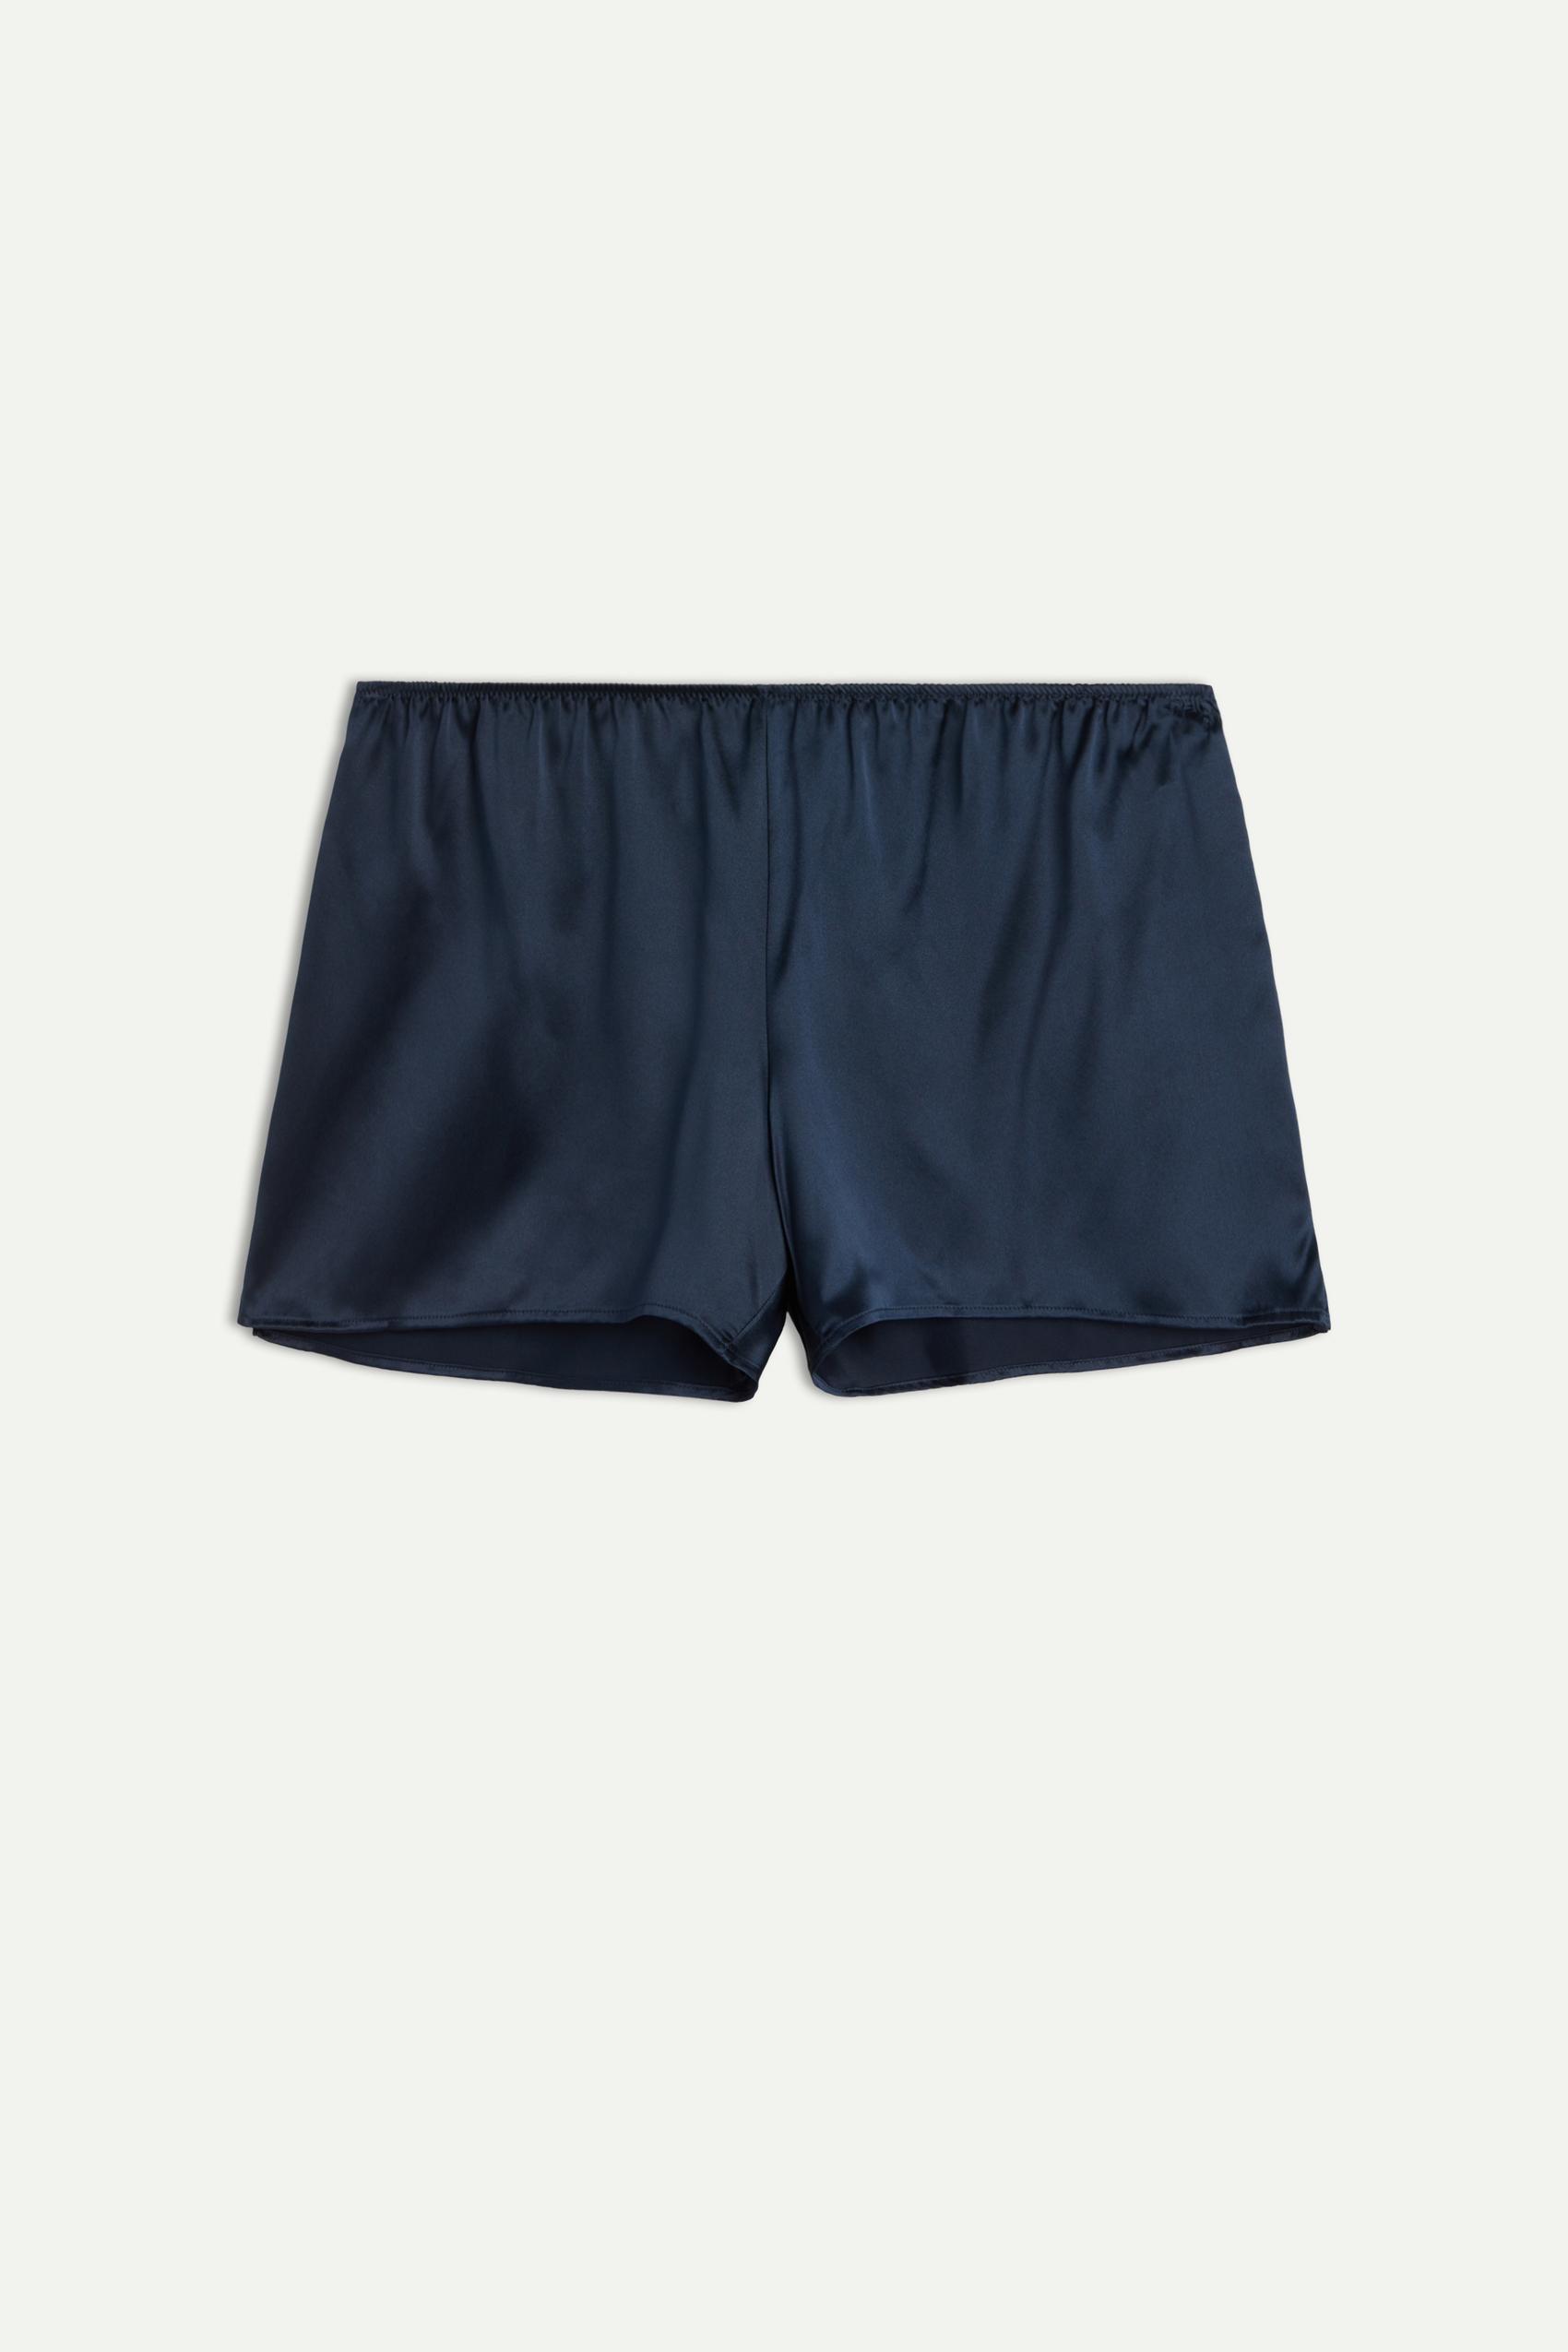 Intimissimi - Blue Smooth Silk-Satin Shorts